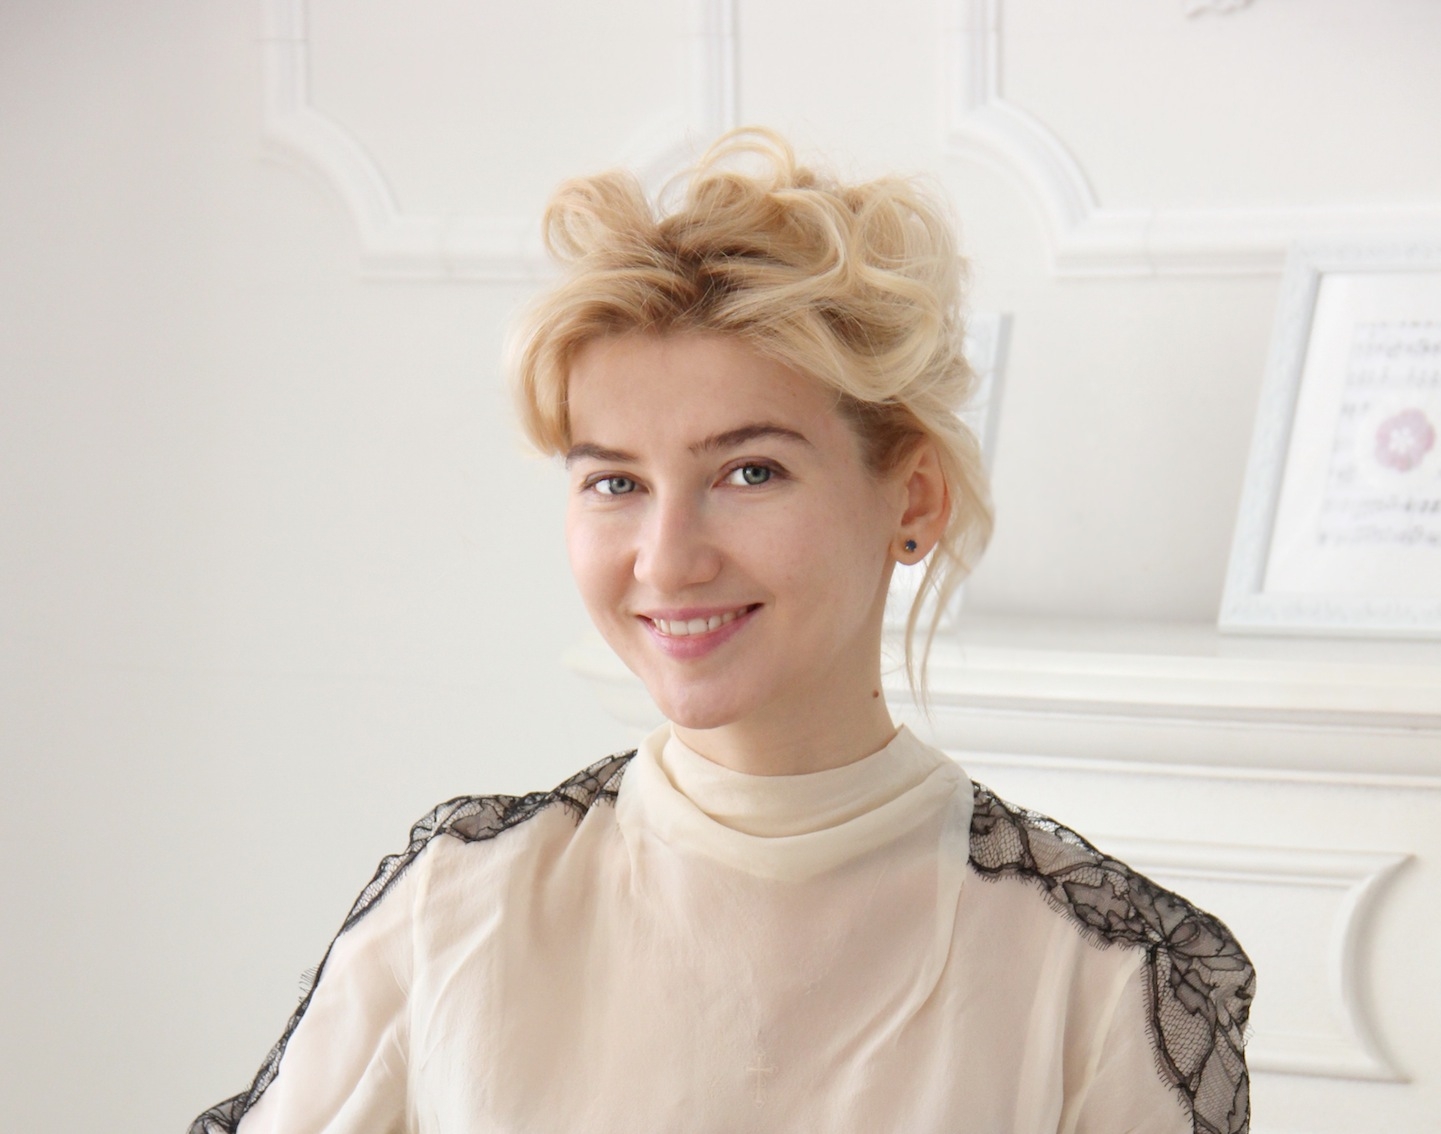             Горбачева Наталья Викторовна
    